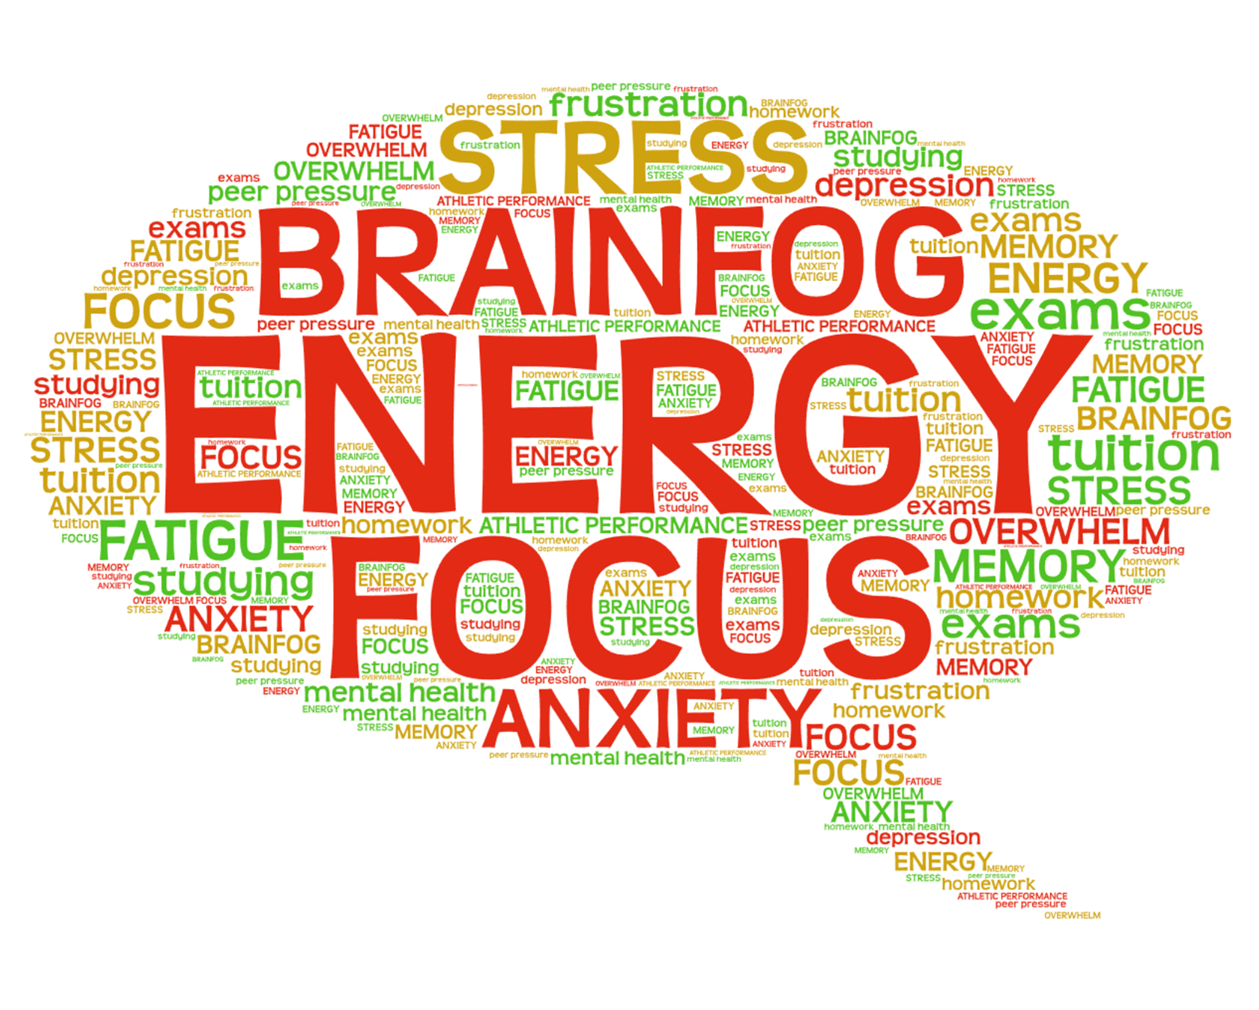 Anxiety and brain fog